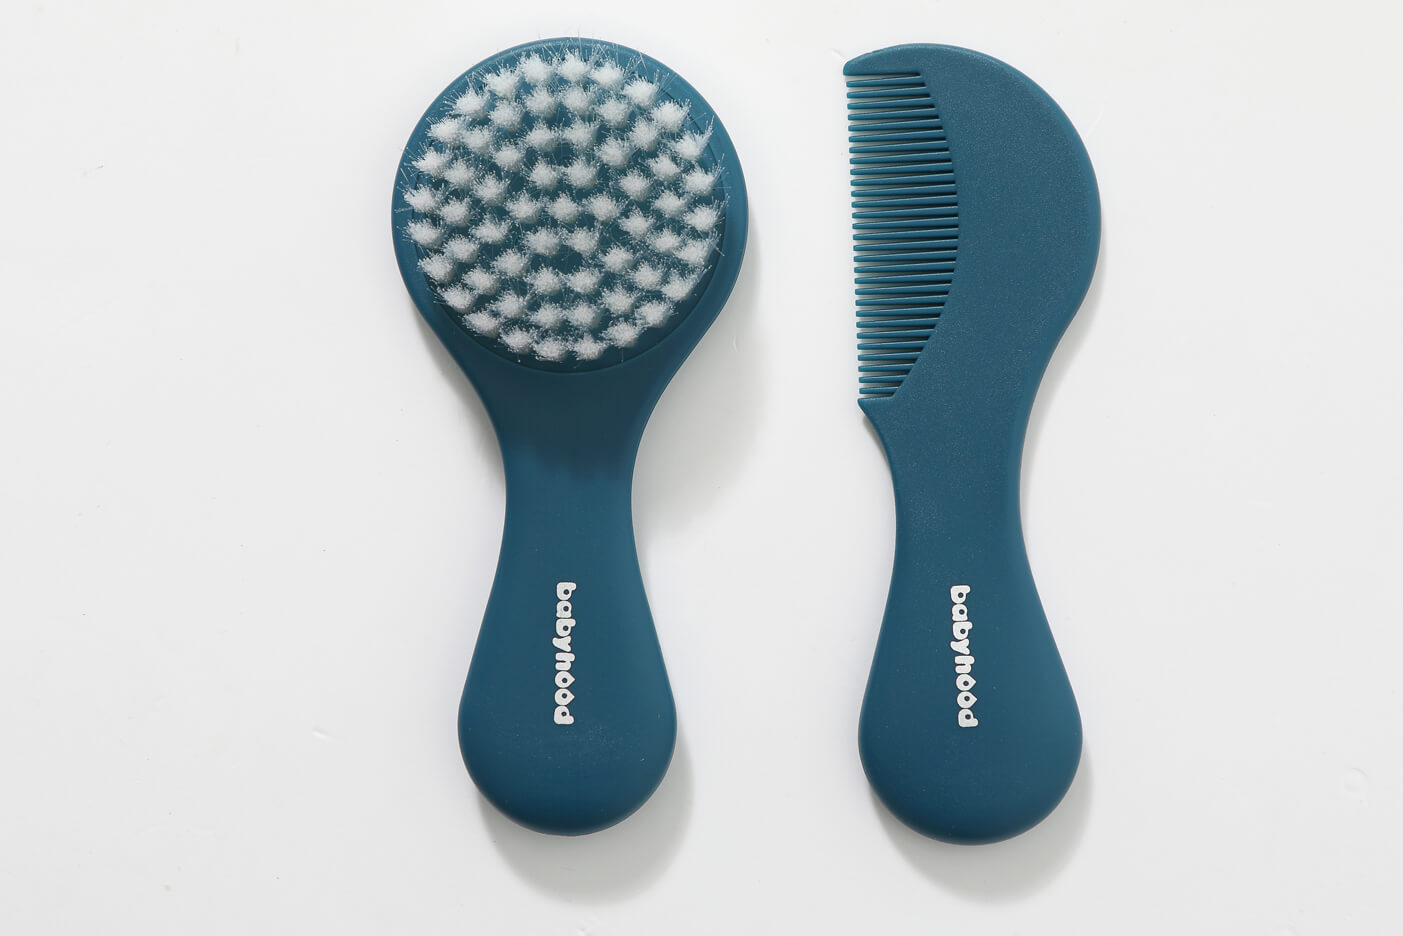 Advantages of Babyhood's Comb+ Brush